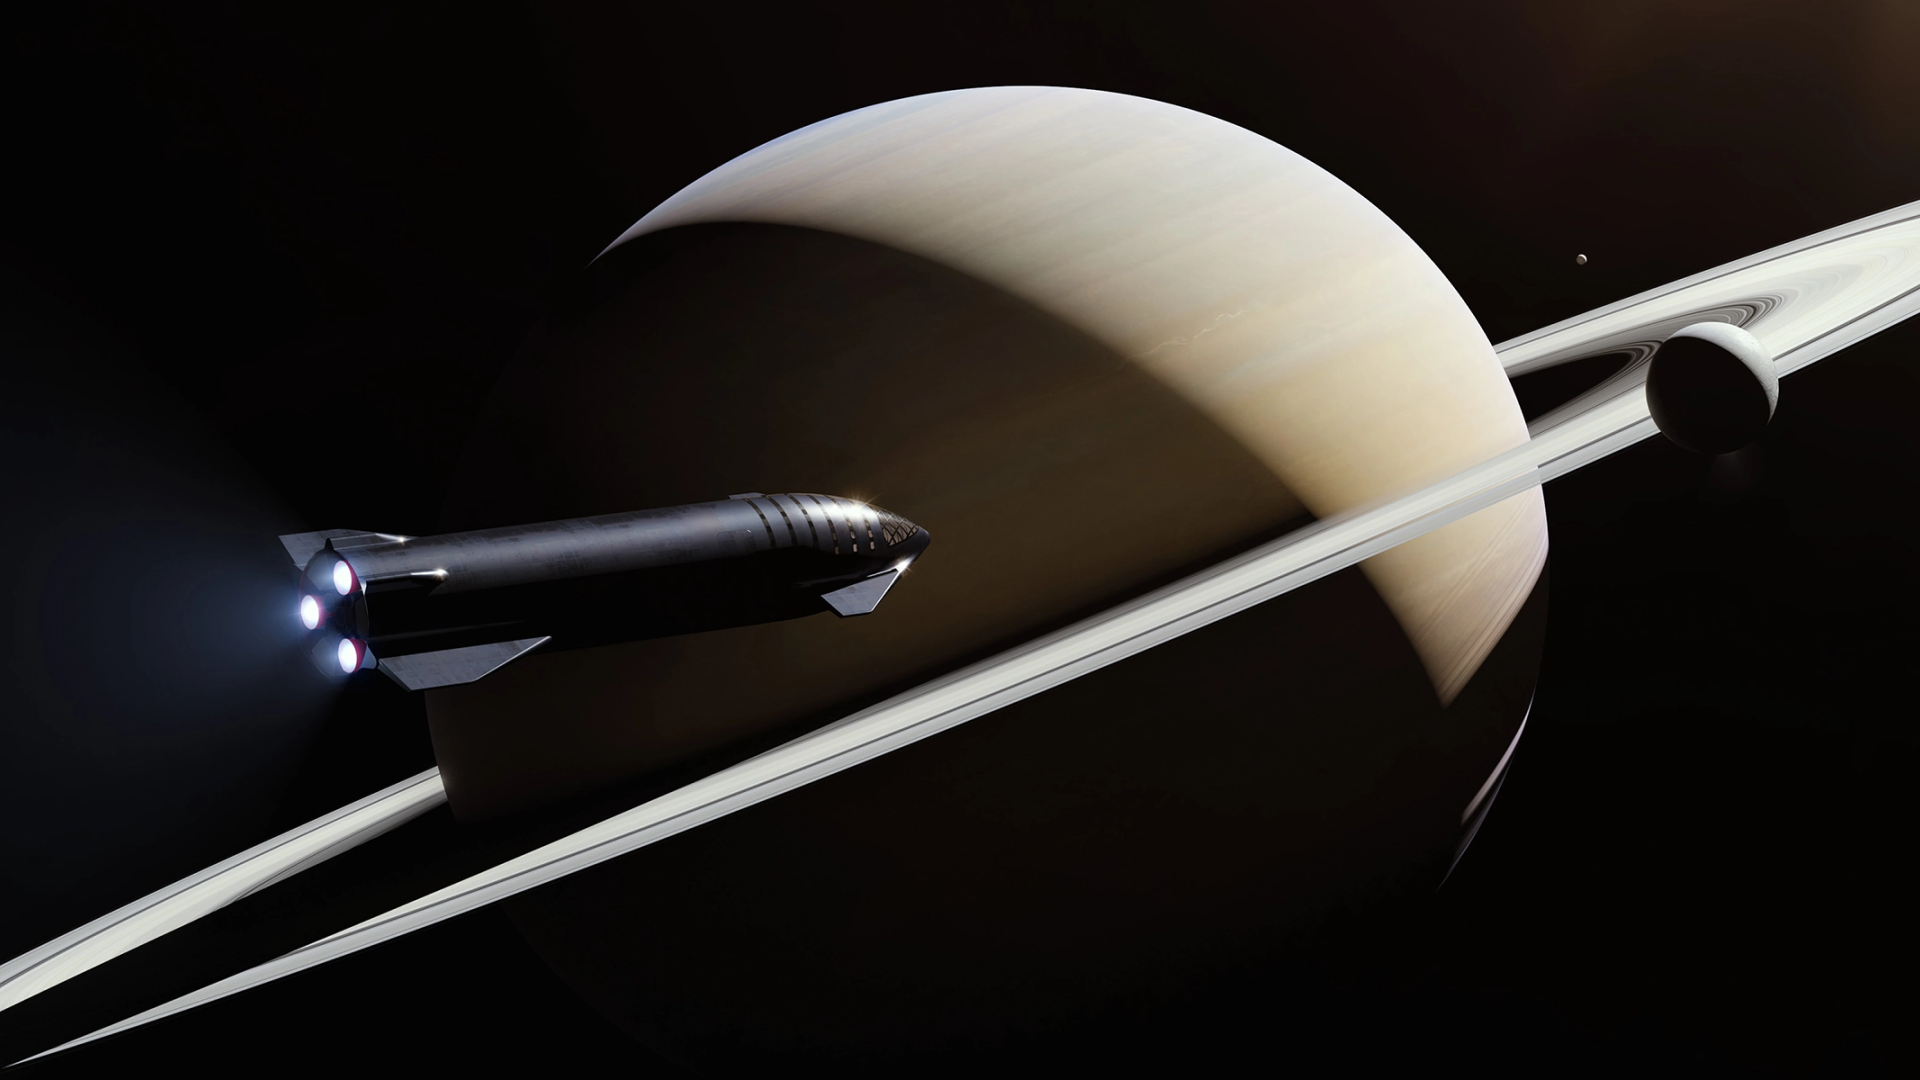 NASA ประกาศเลือก SpaceX พัฒนา HLS ระบบยานลงจอดบนดวงจันทร์ในโครงการ Artemis